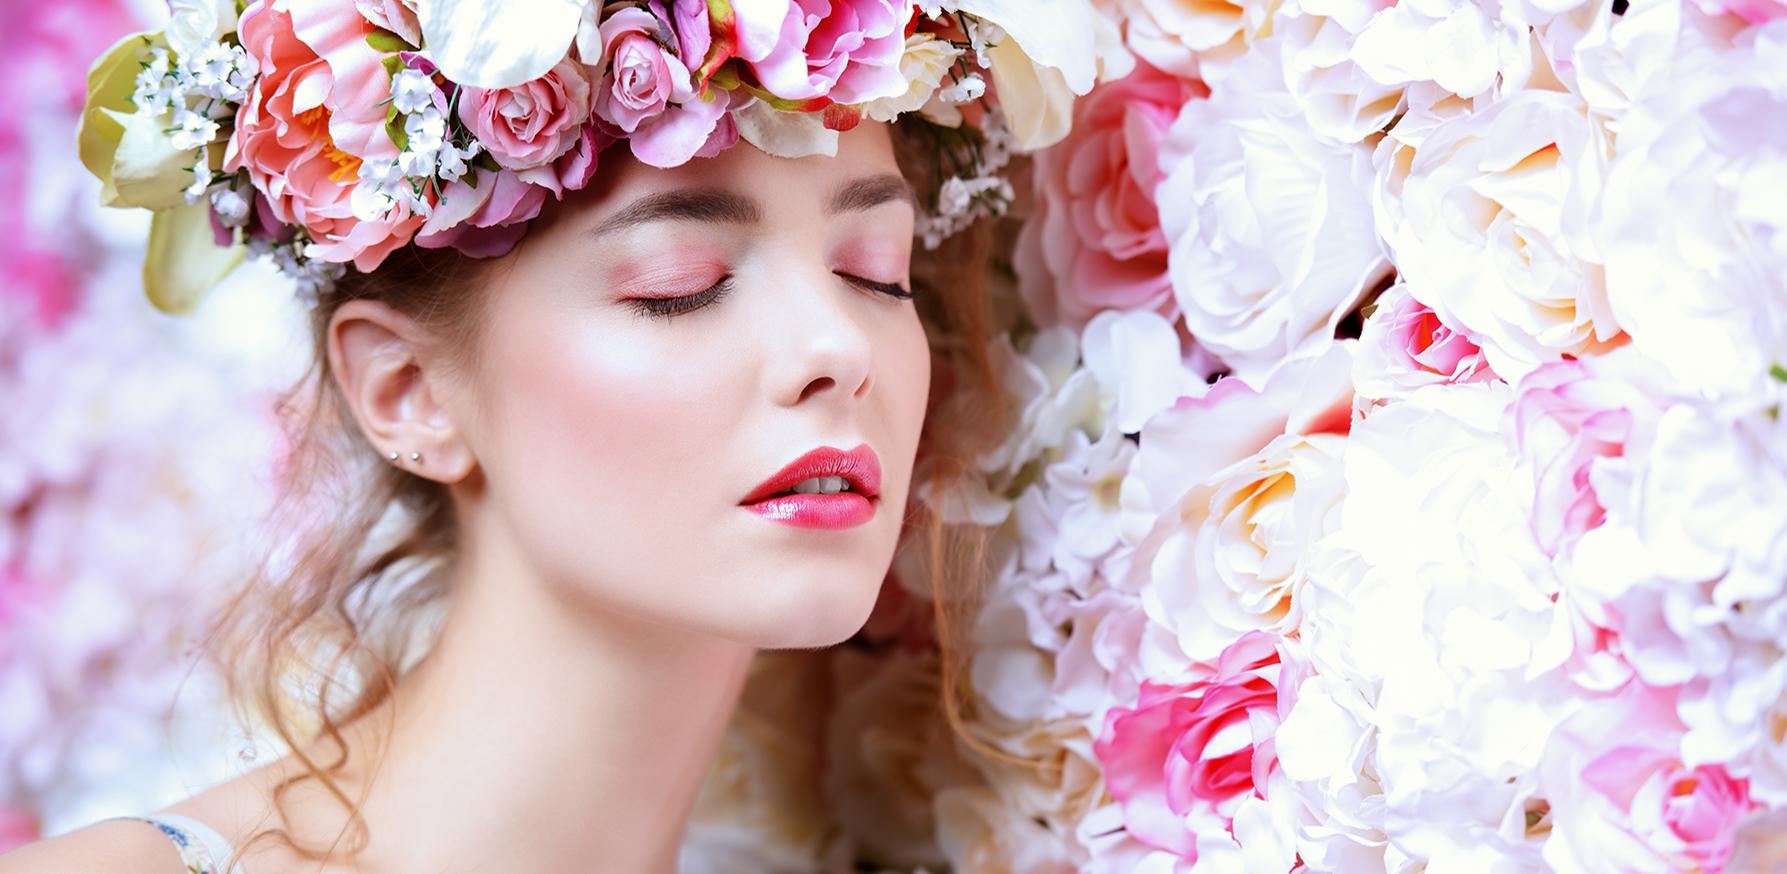 feminine-fragrances-for-spring-woman-in-flower-crown-against-flower-wall